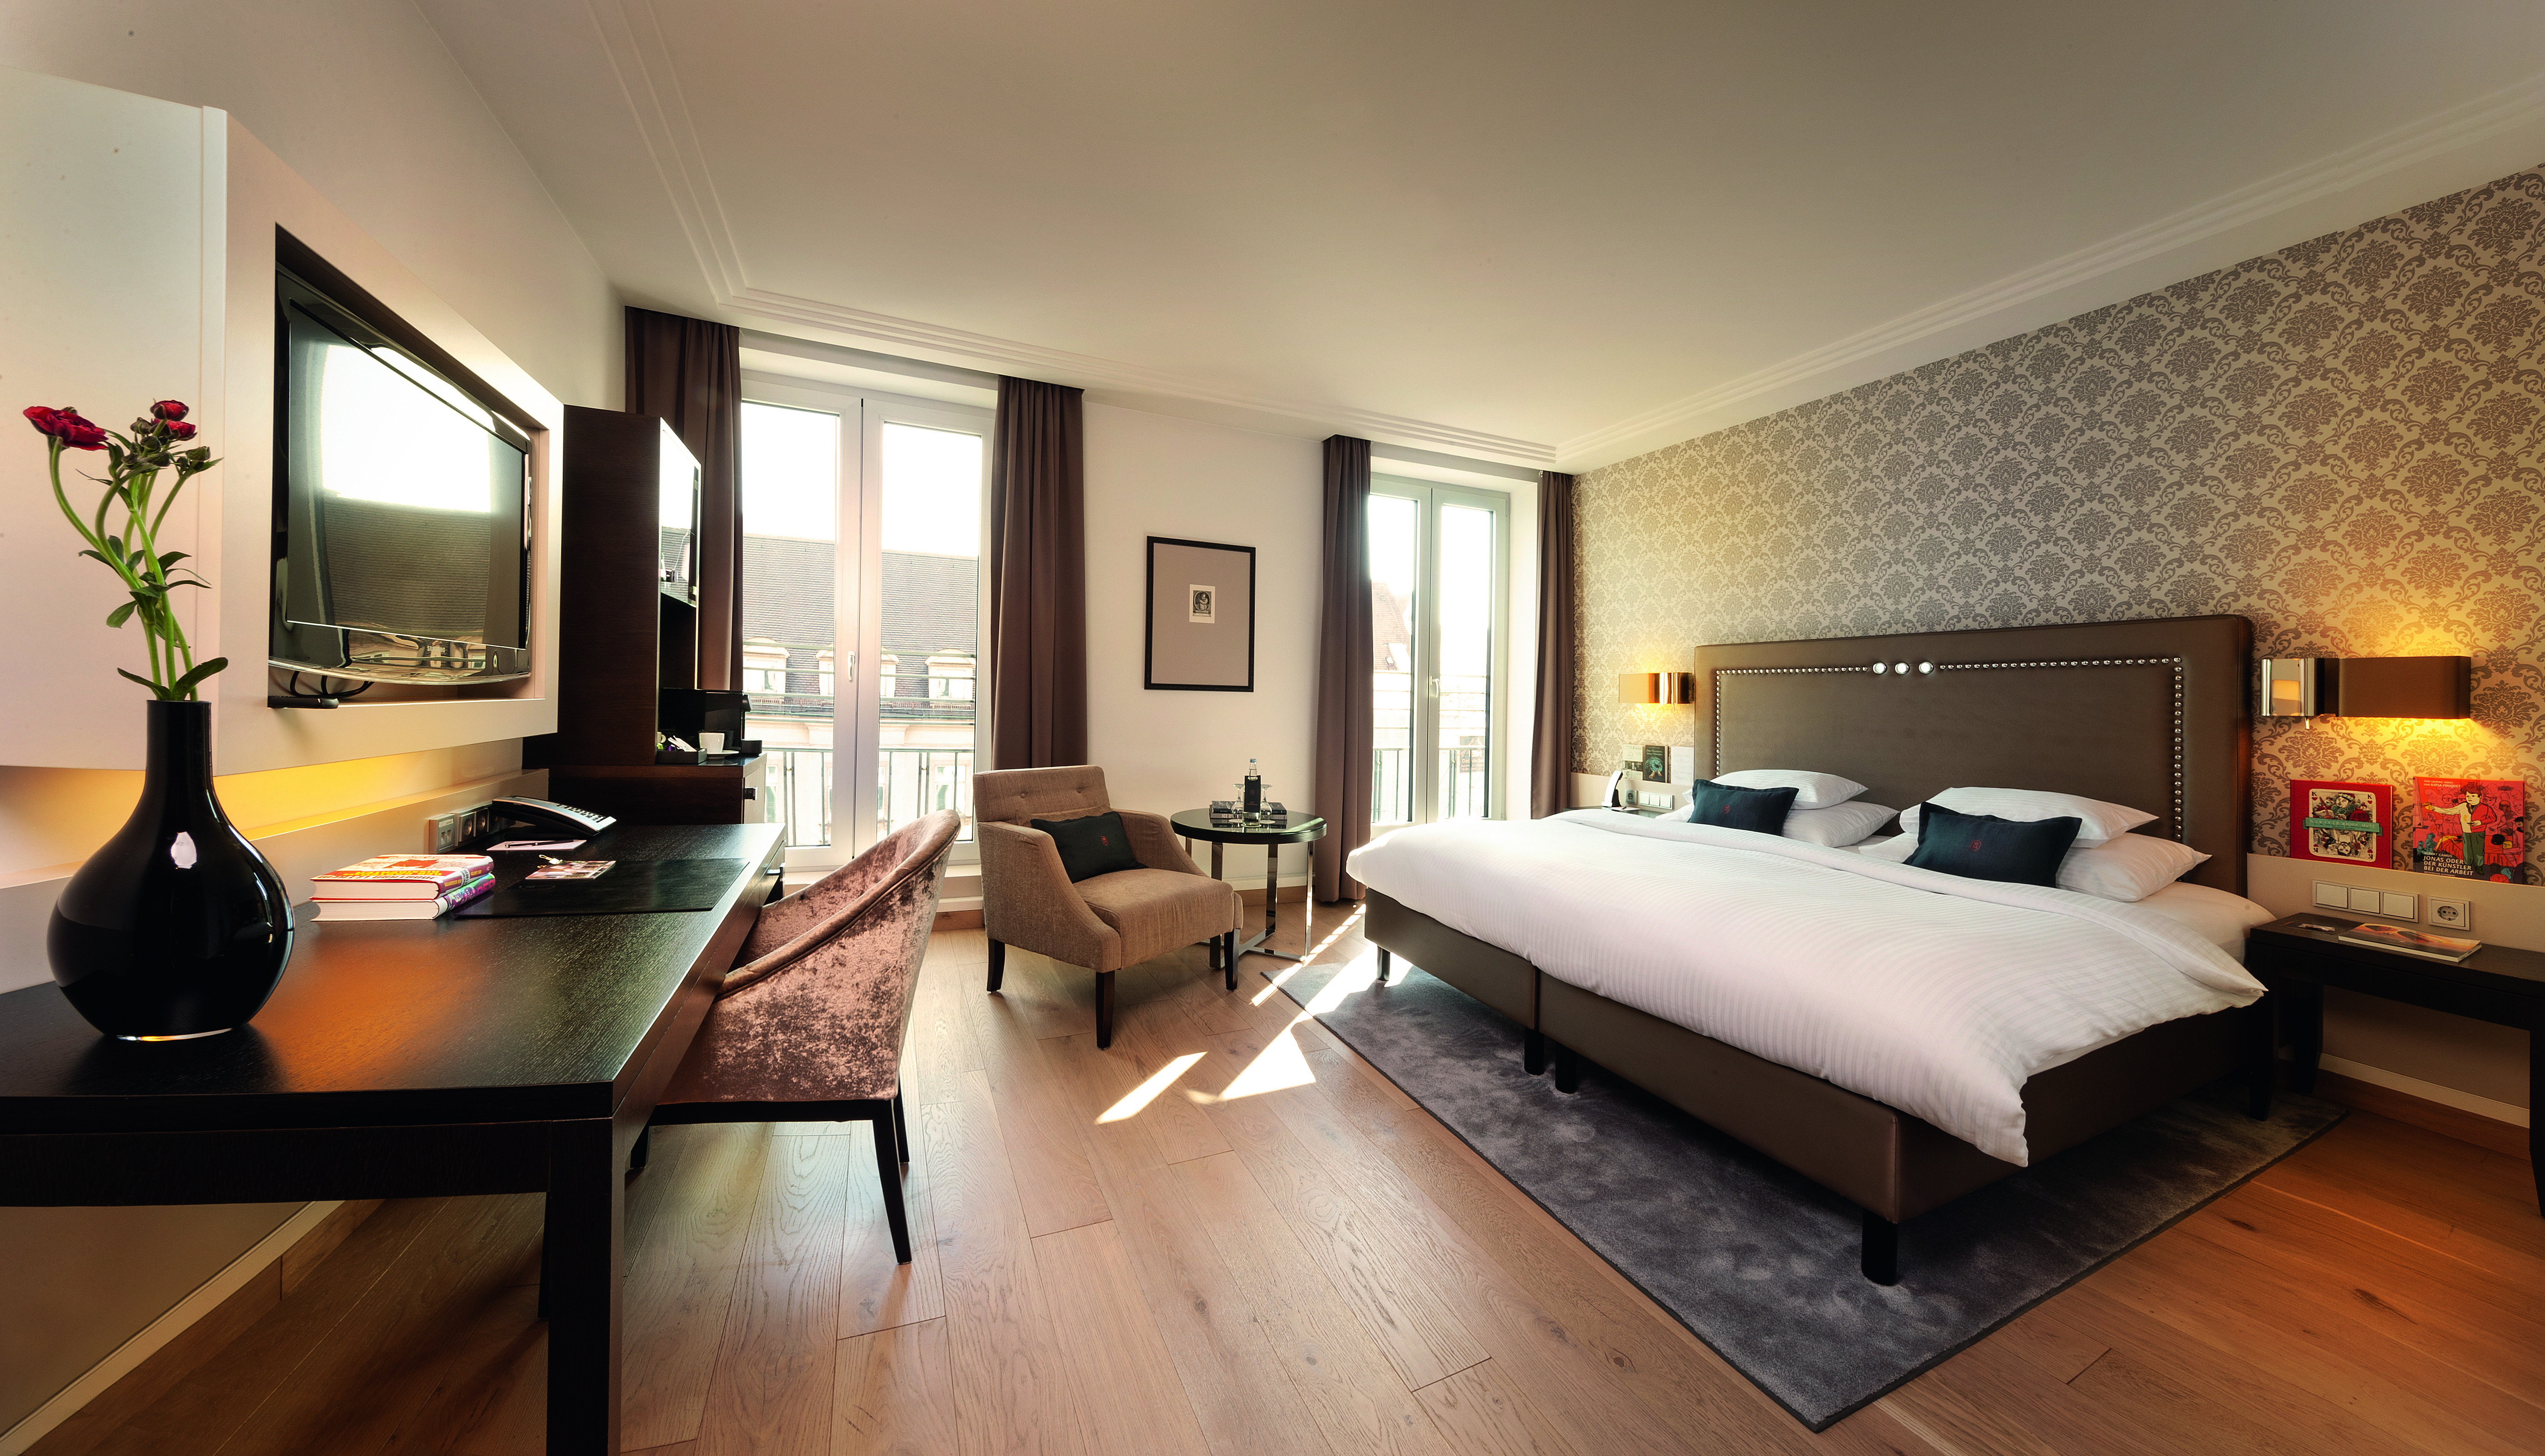 Zimmerbild Kategorie Classic - Hotel Maximilian's in Augsburg